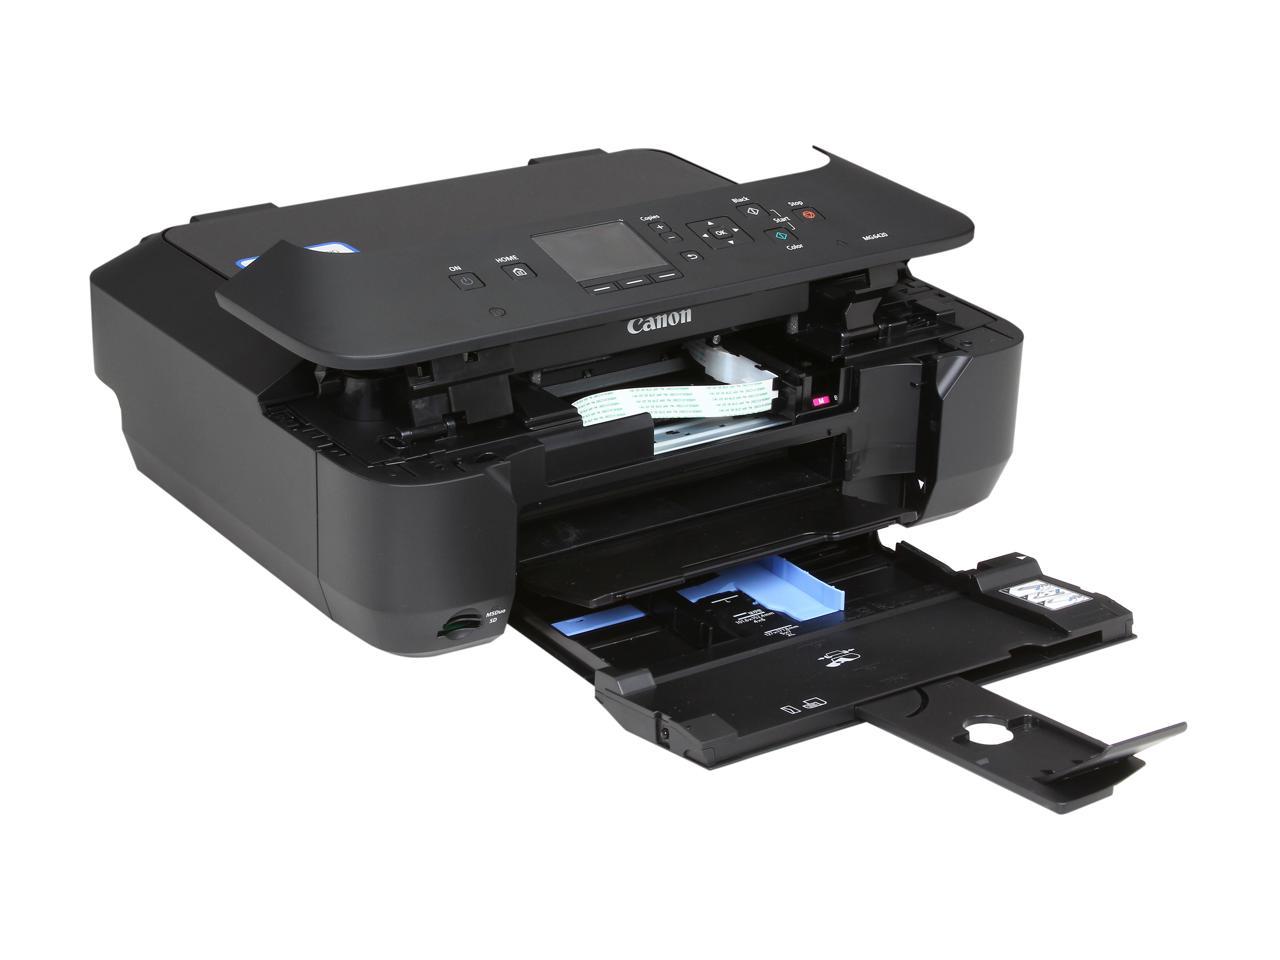 Canon Pixma Mg6420 Wireless Inkjet Photo All In One Printer Black 8145